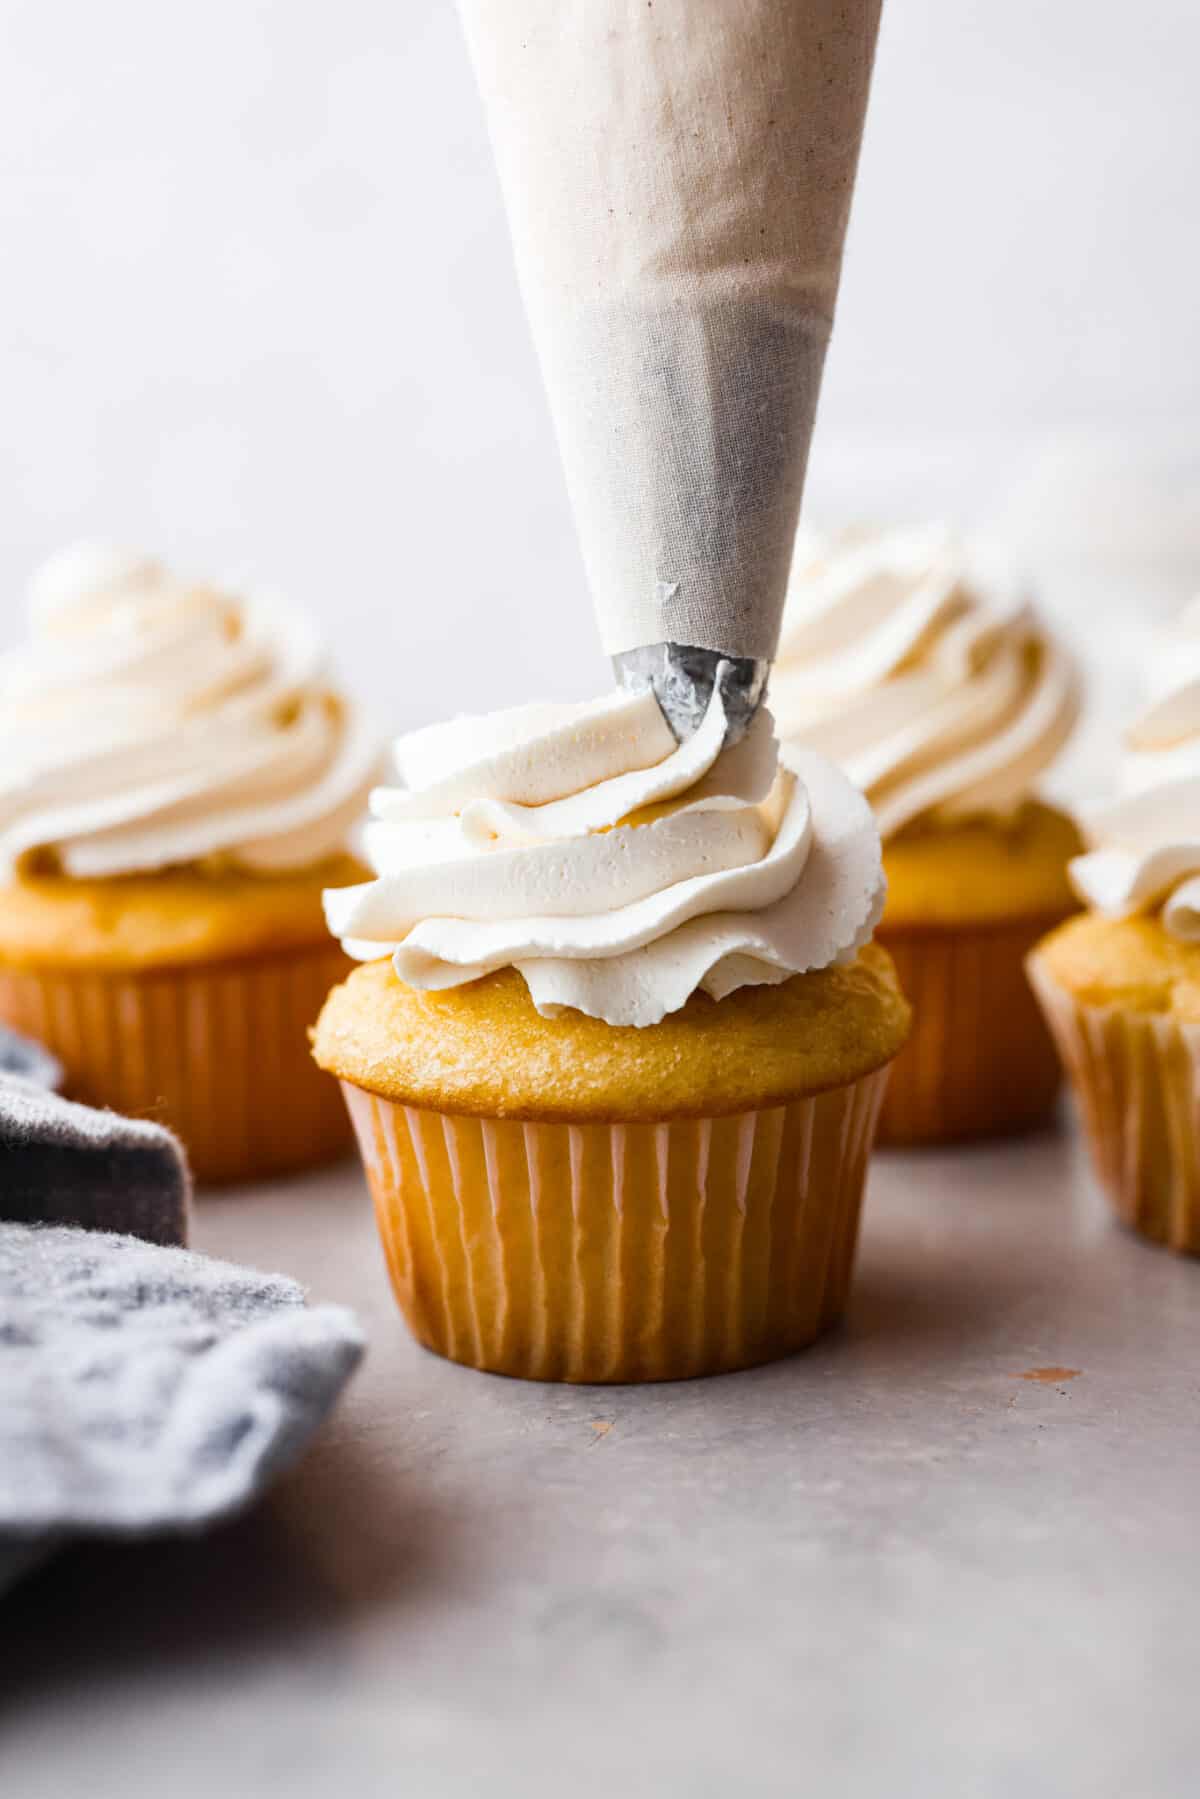 Piping Swiss meringue buttercream onto a vanilla cupcake.